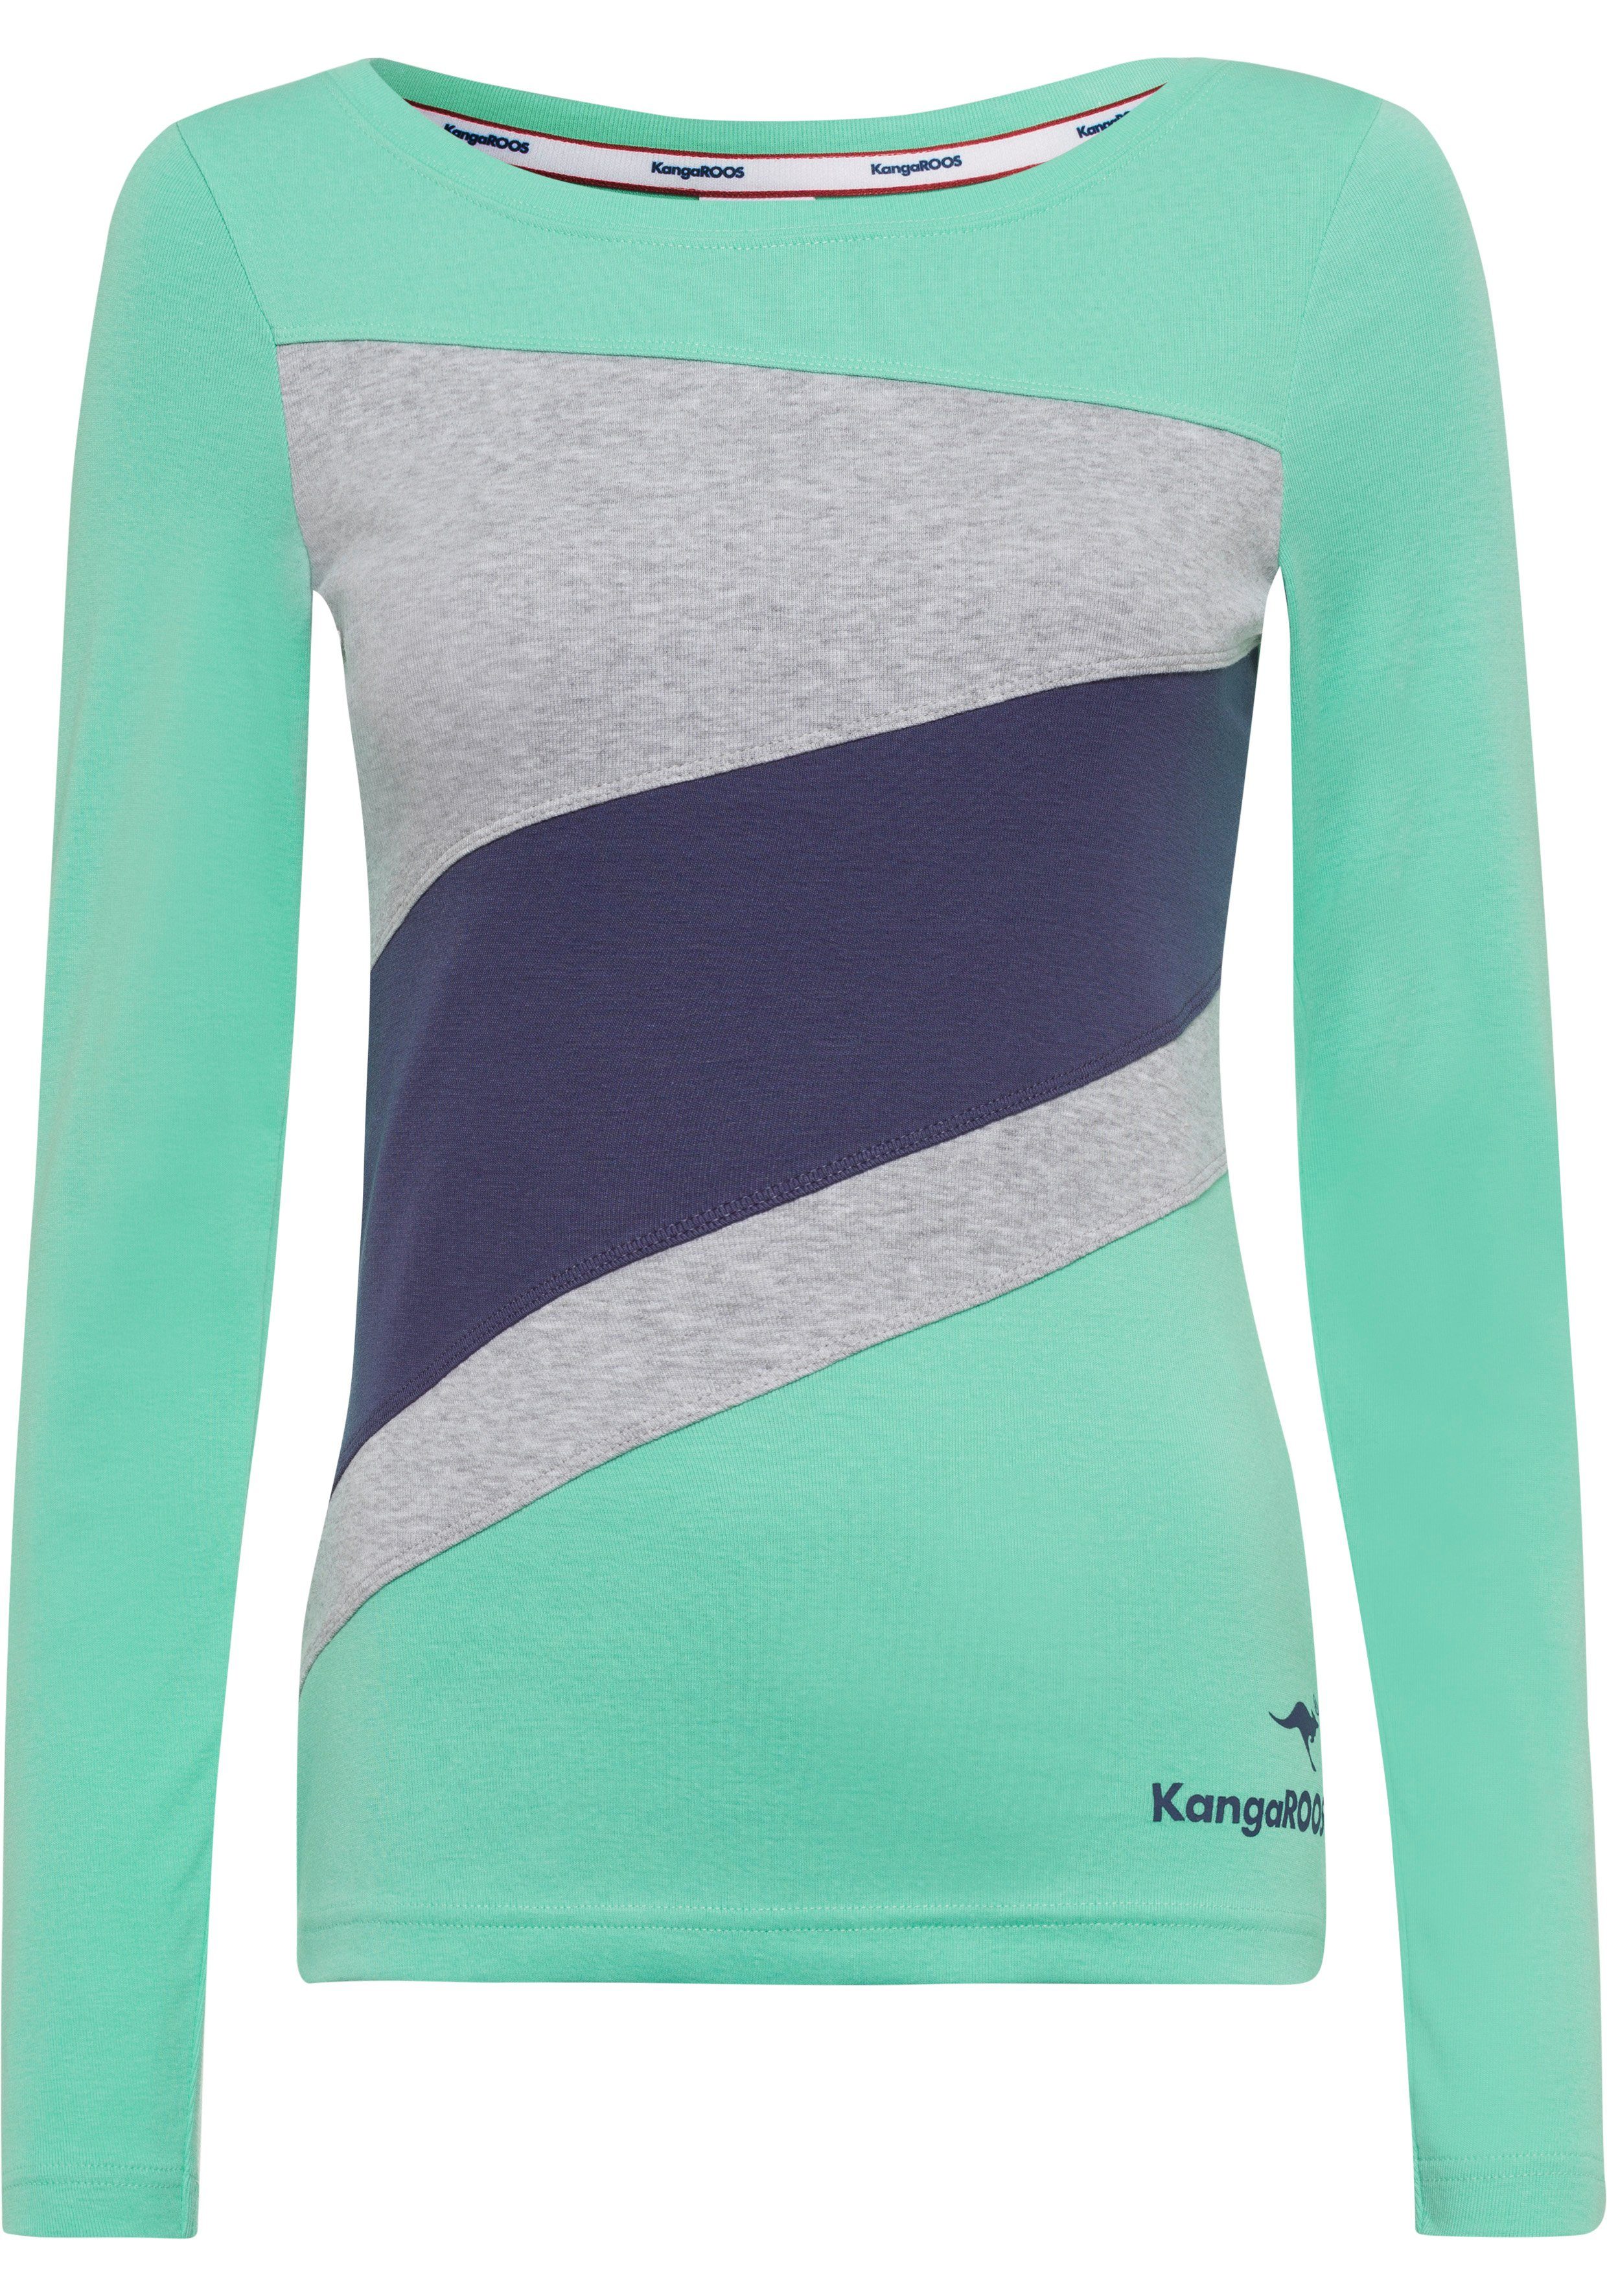 Blocking hellgrün-grau-marine vorne Color Details KangaROOS Longsleeve mit